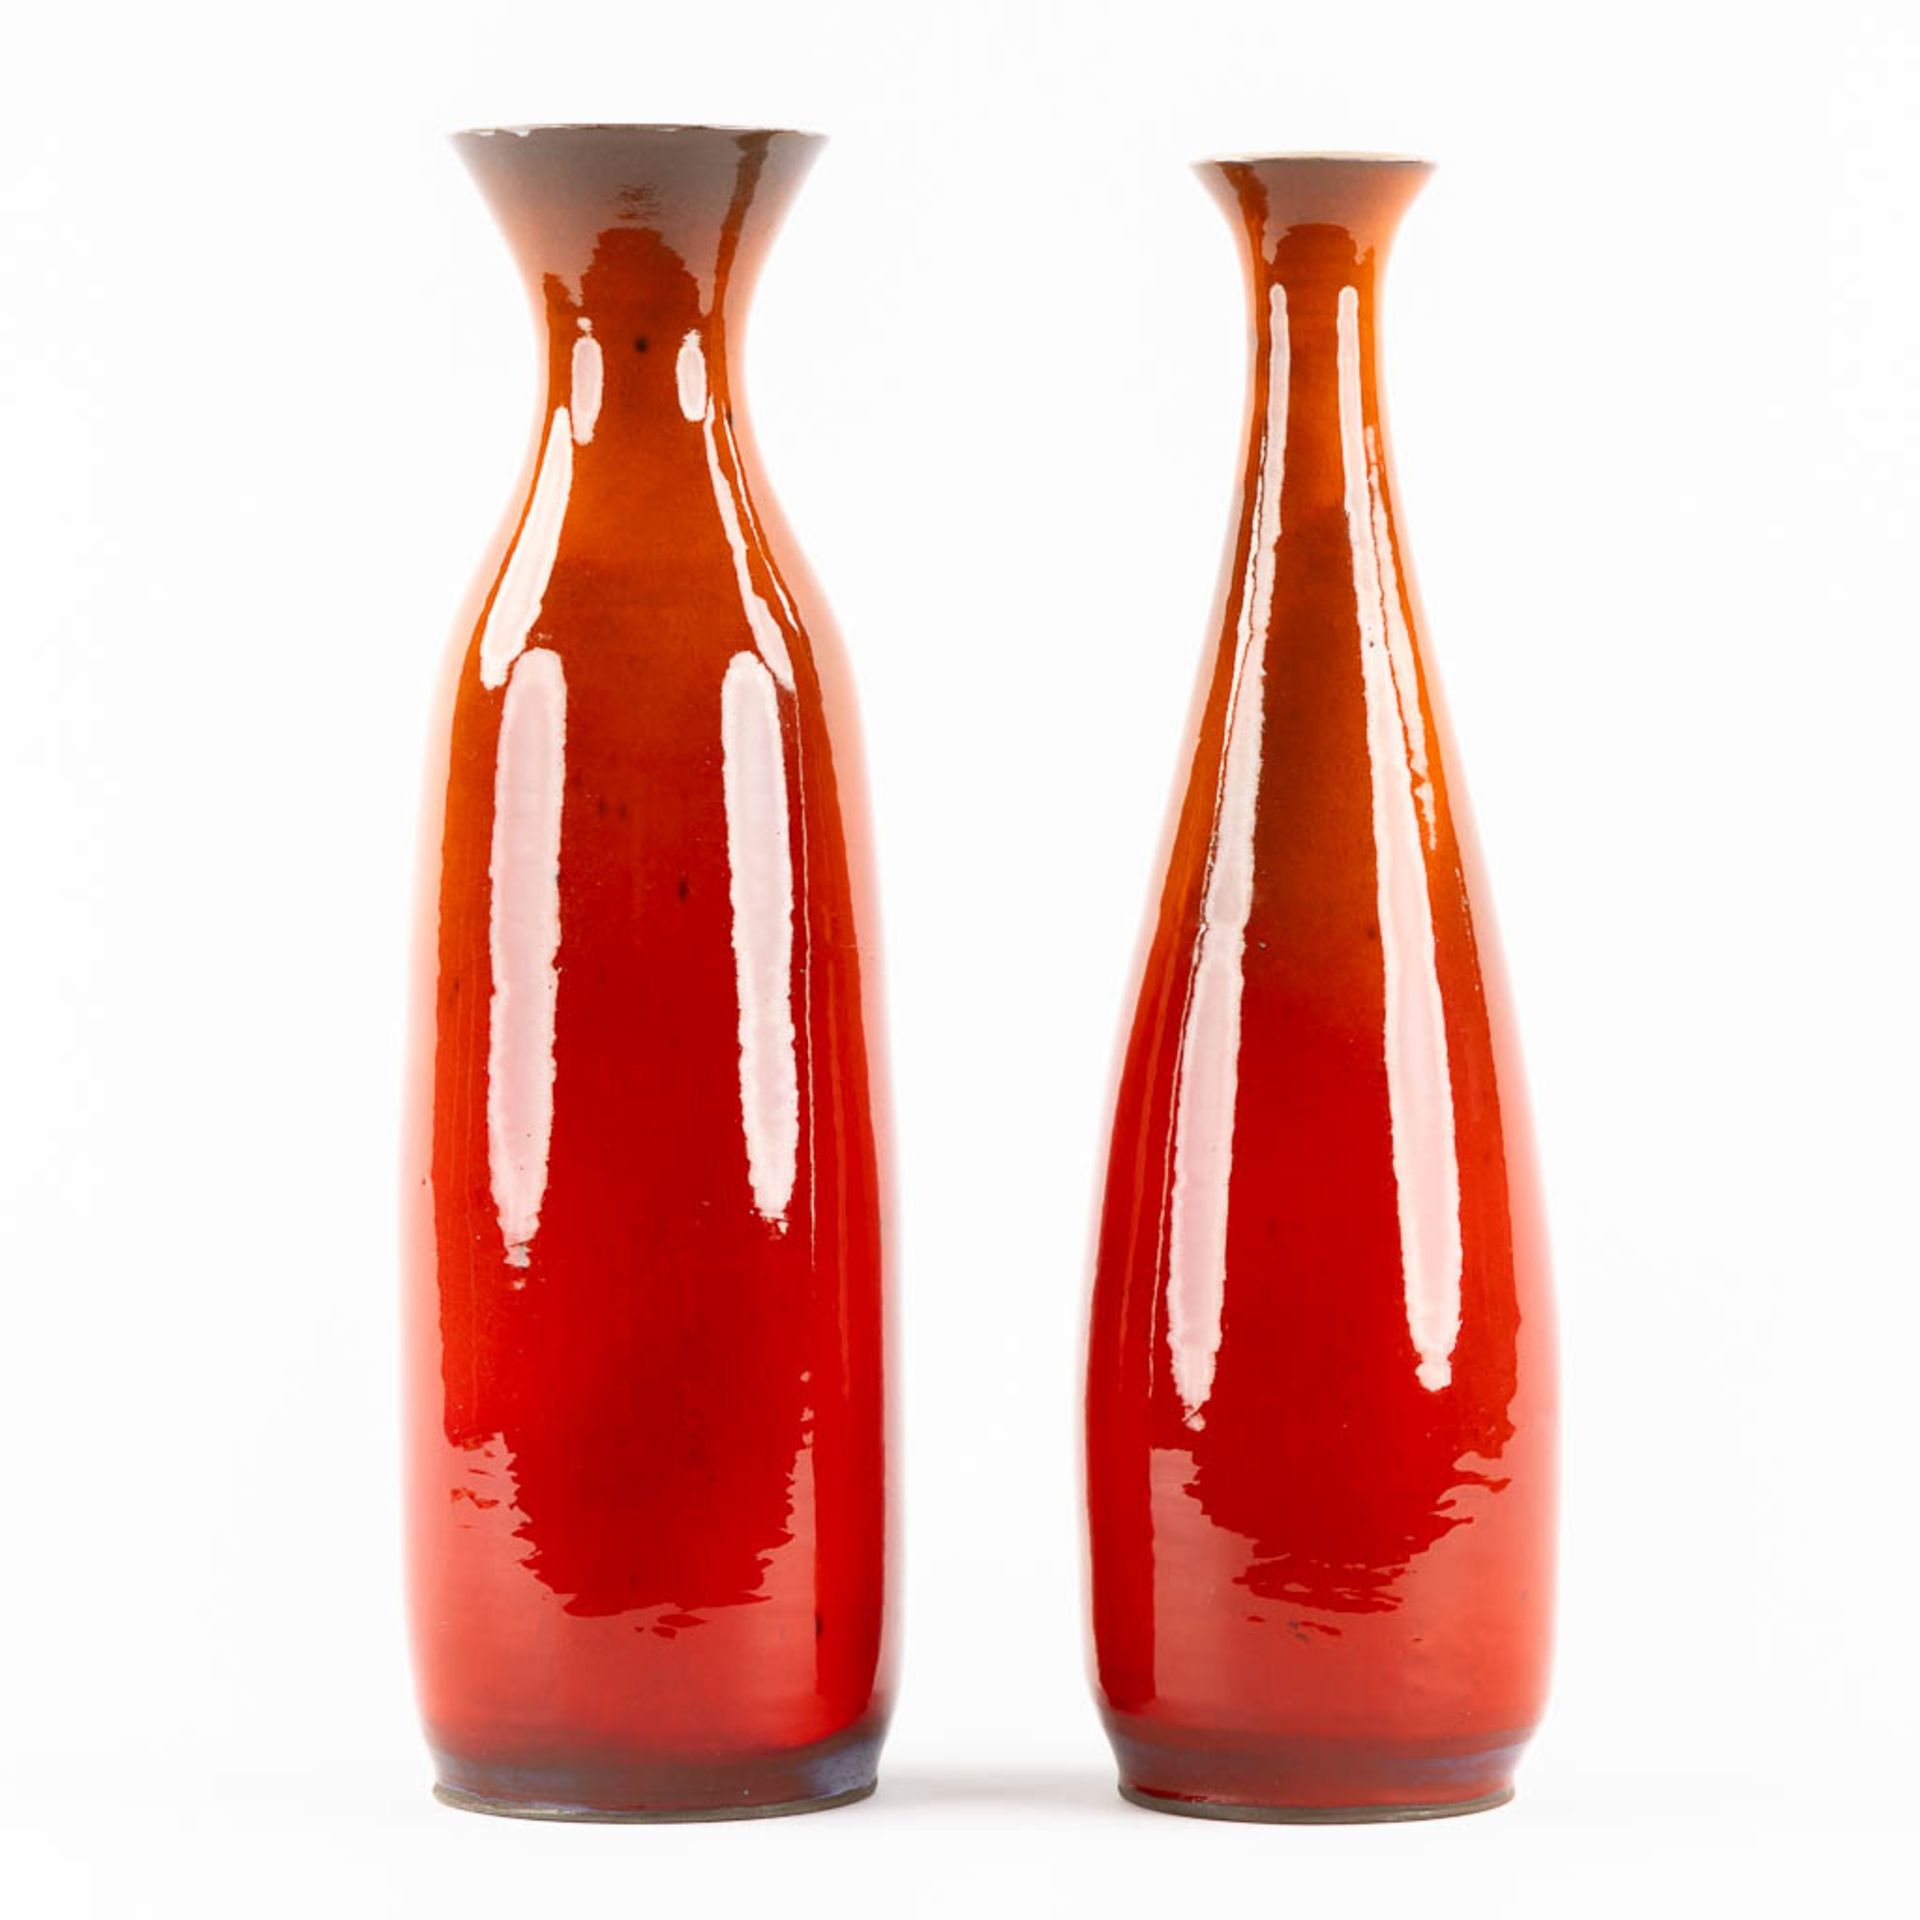 Oswald TIEBERGHIEN (1936) 'Two Vases' glazed ceramics. (H:41 x D:11 cm) - Image 5 of 11